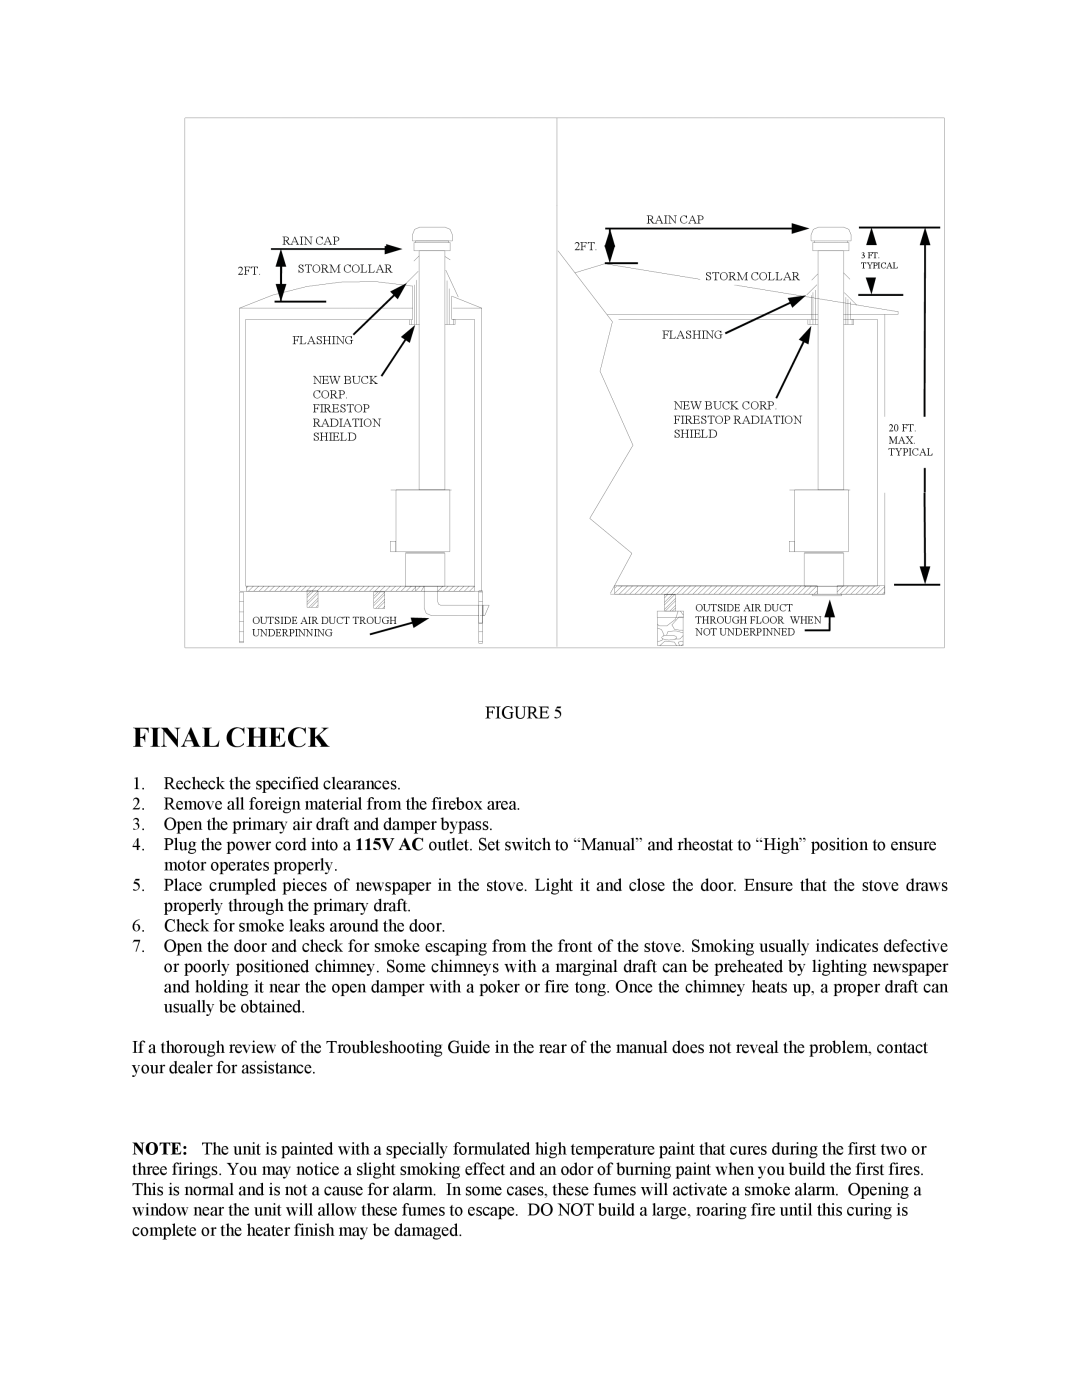 New Buck Corporation 20 Room Heater manual Final Check 